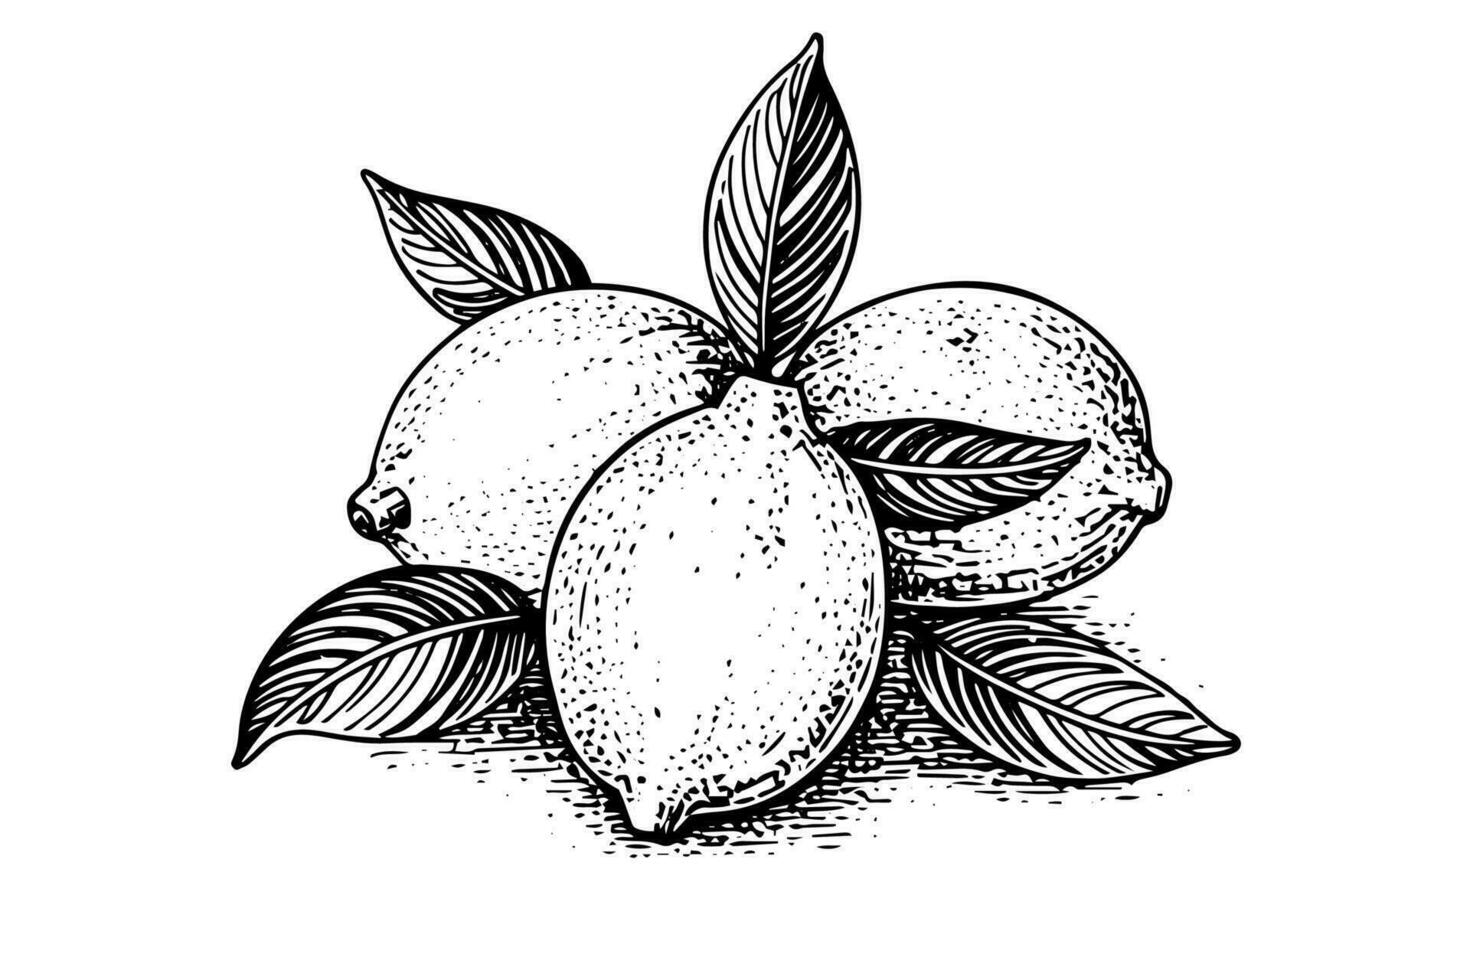 Hand drawn ink sketch vector illustration of lemon. Citrus in engraving style vector illustration.